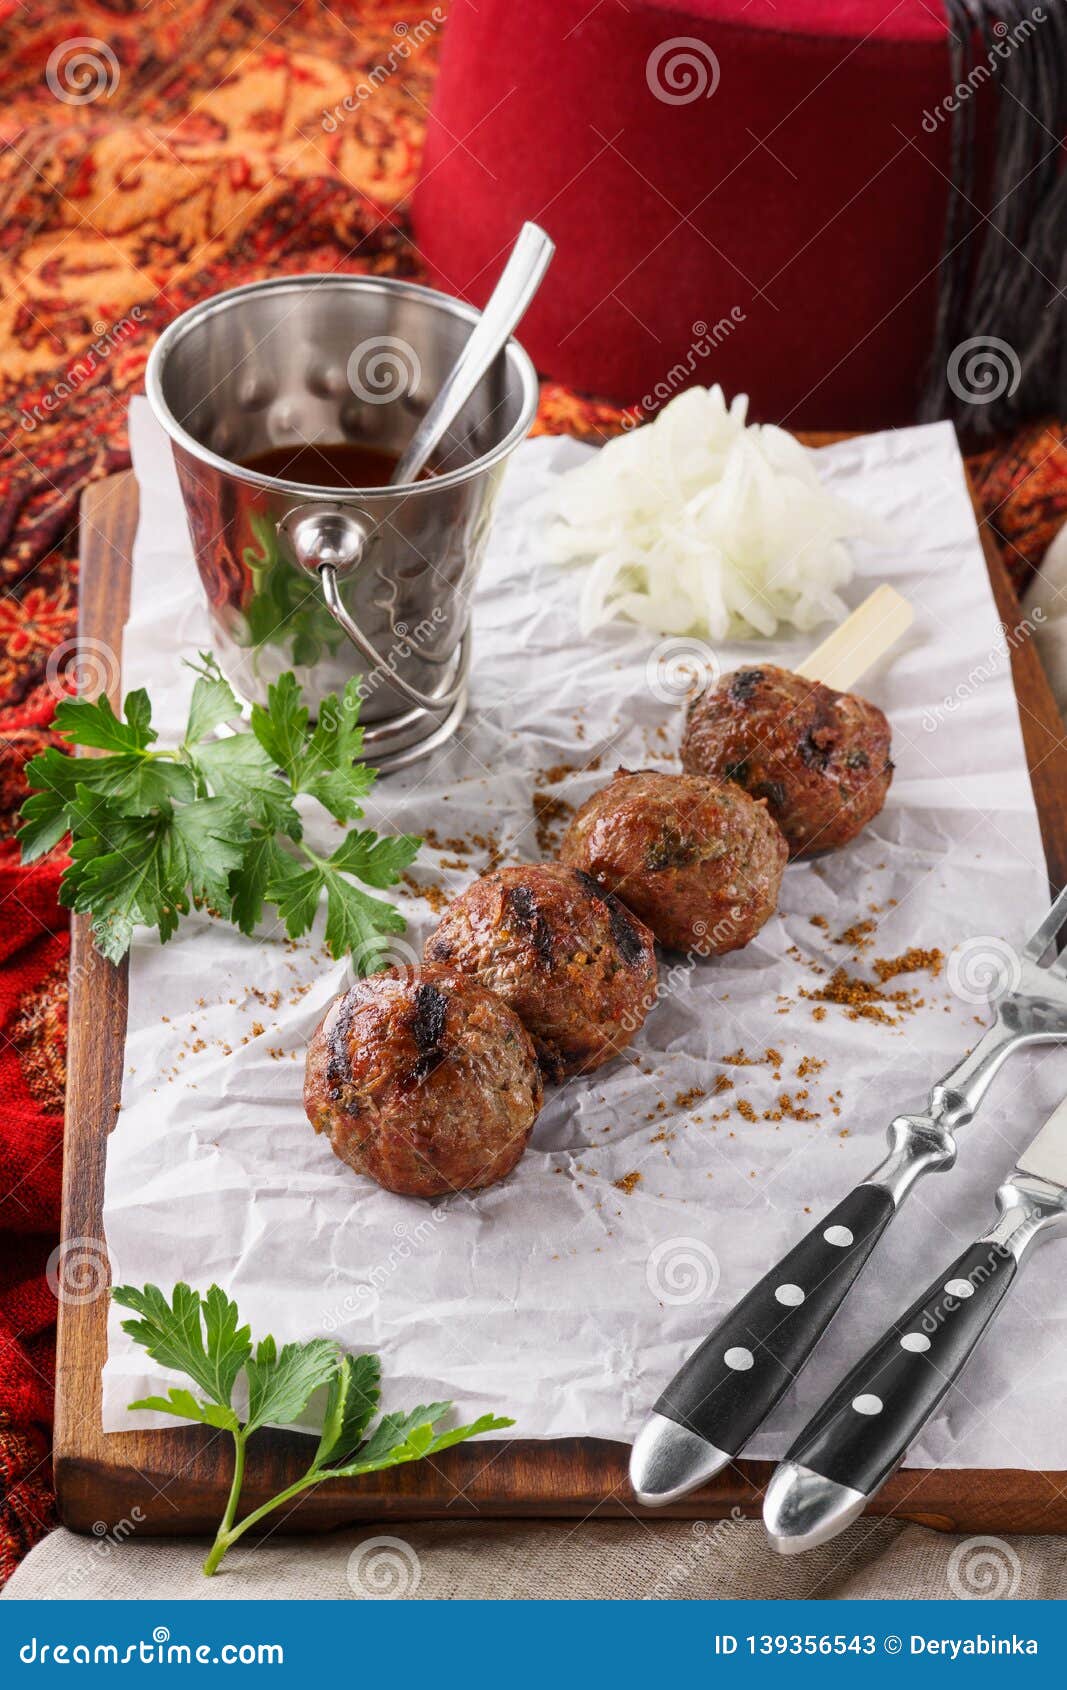 Beef Kebab With Sauce. Middle Eastern, Or Mediterranean Food Stock ...